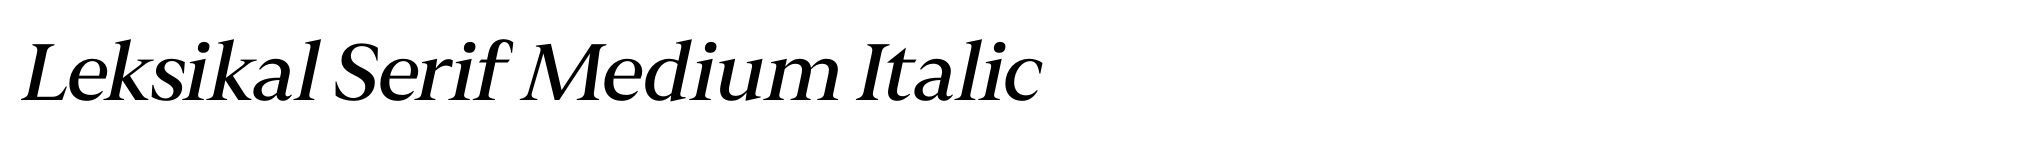 Leksikal Serif Medium Italic image